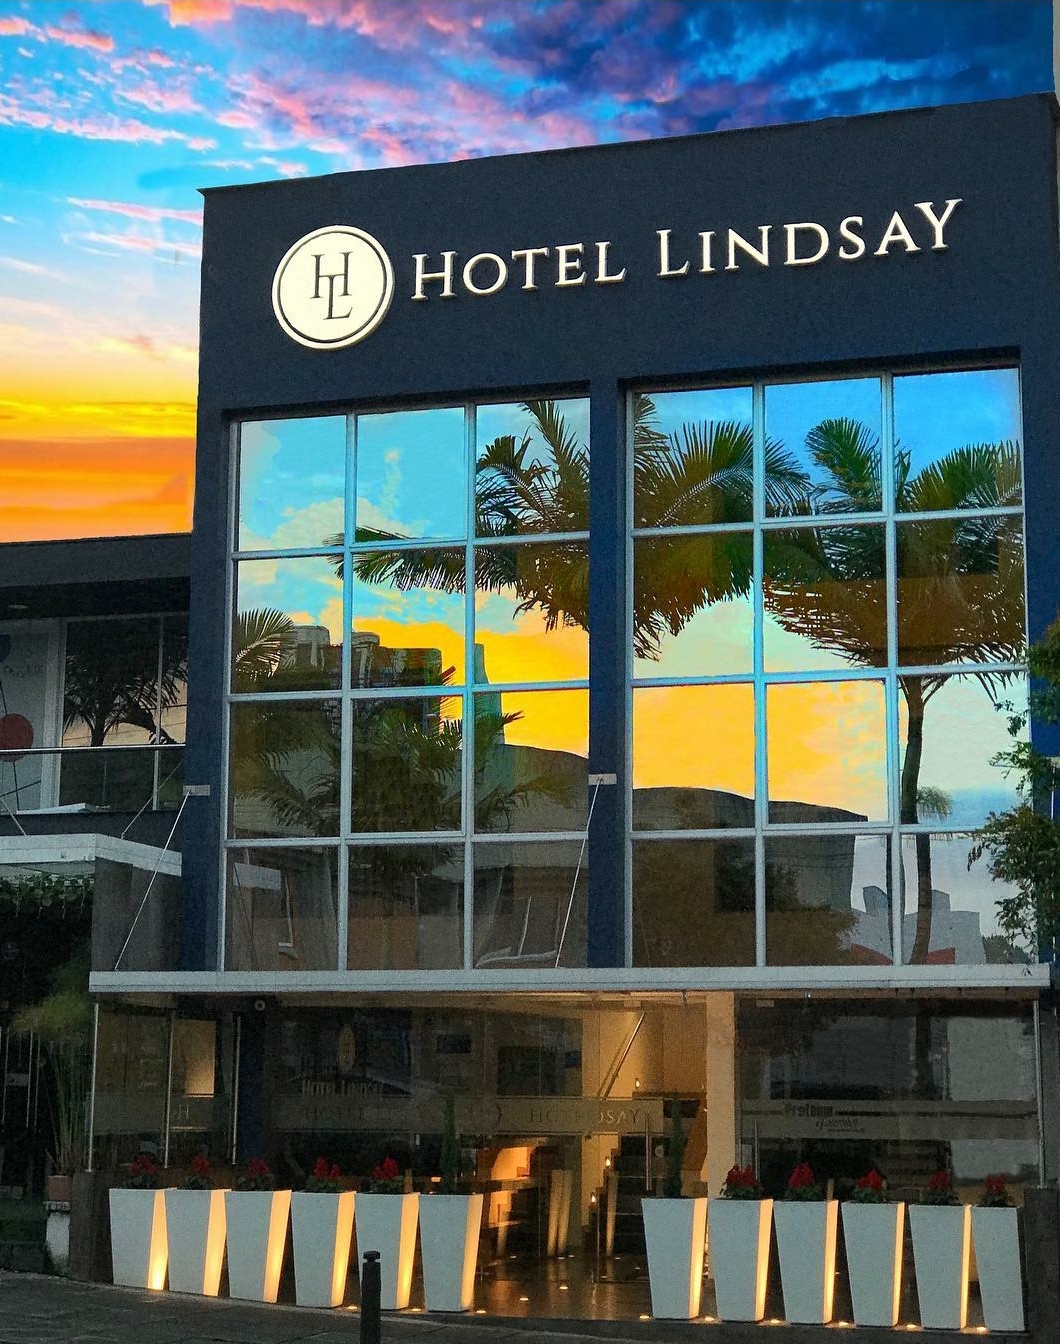 Hotel Lindsay